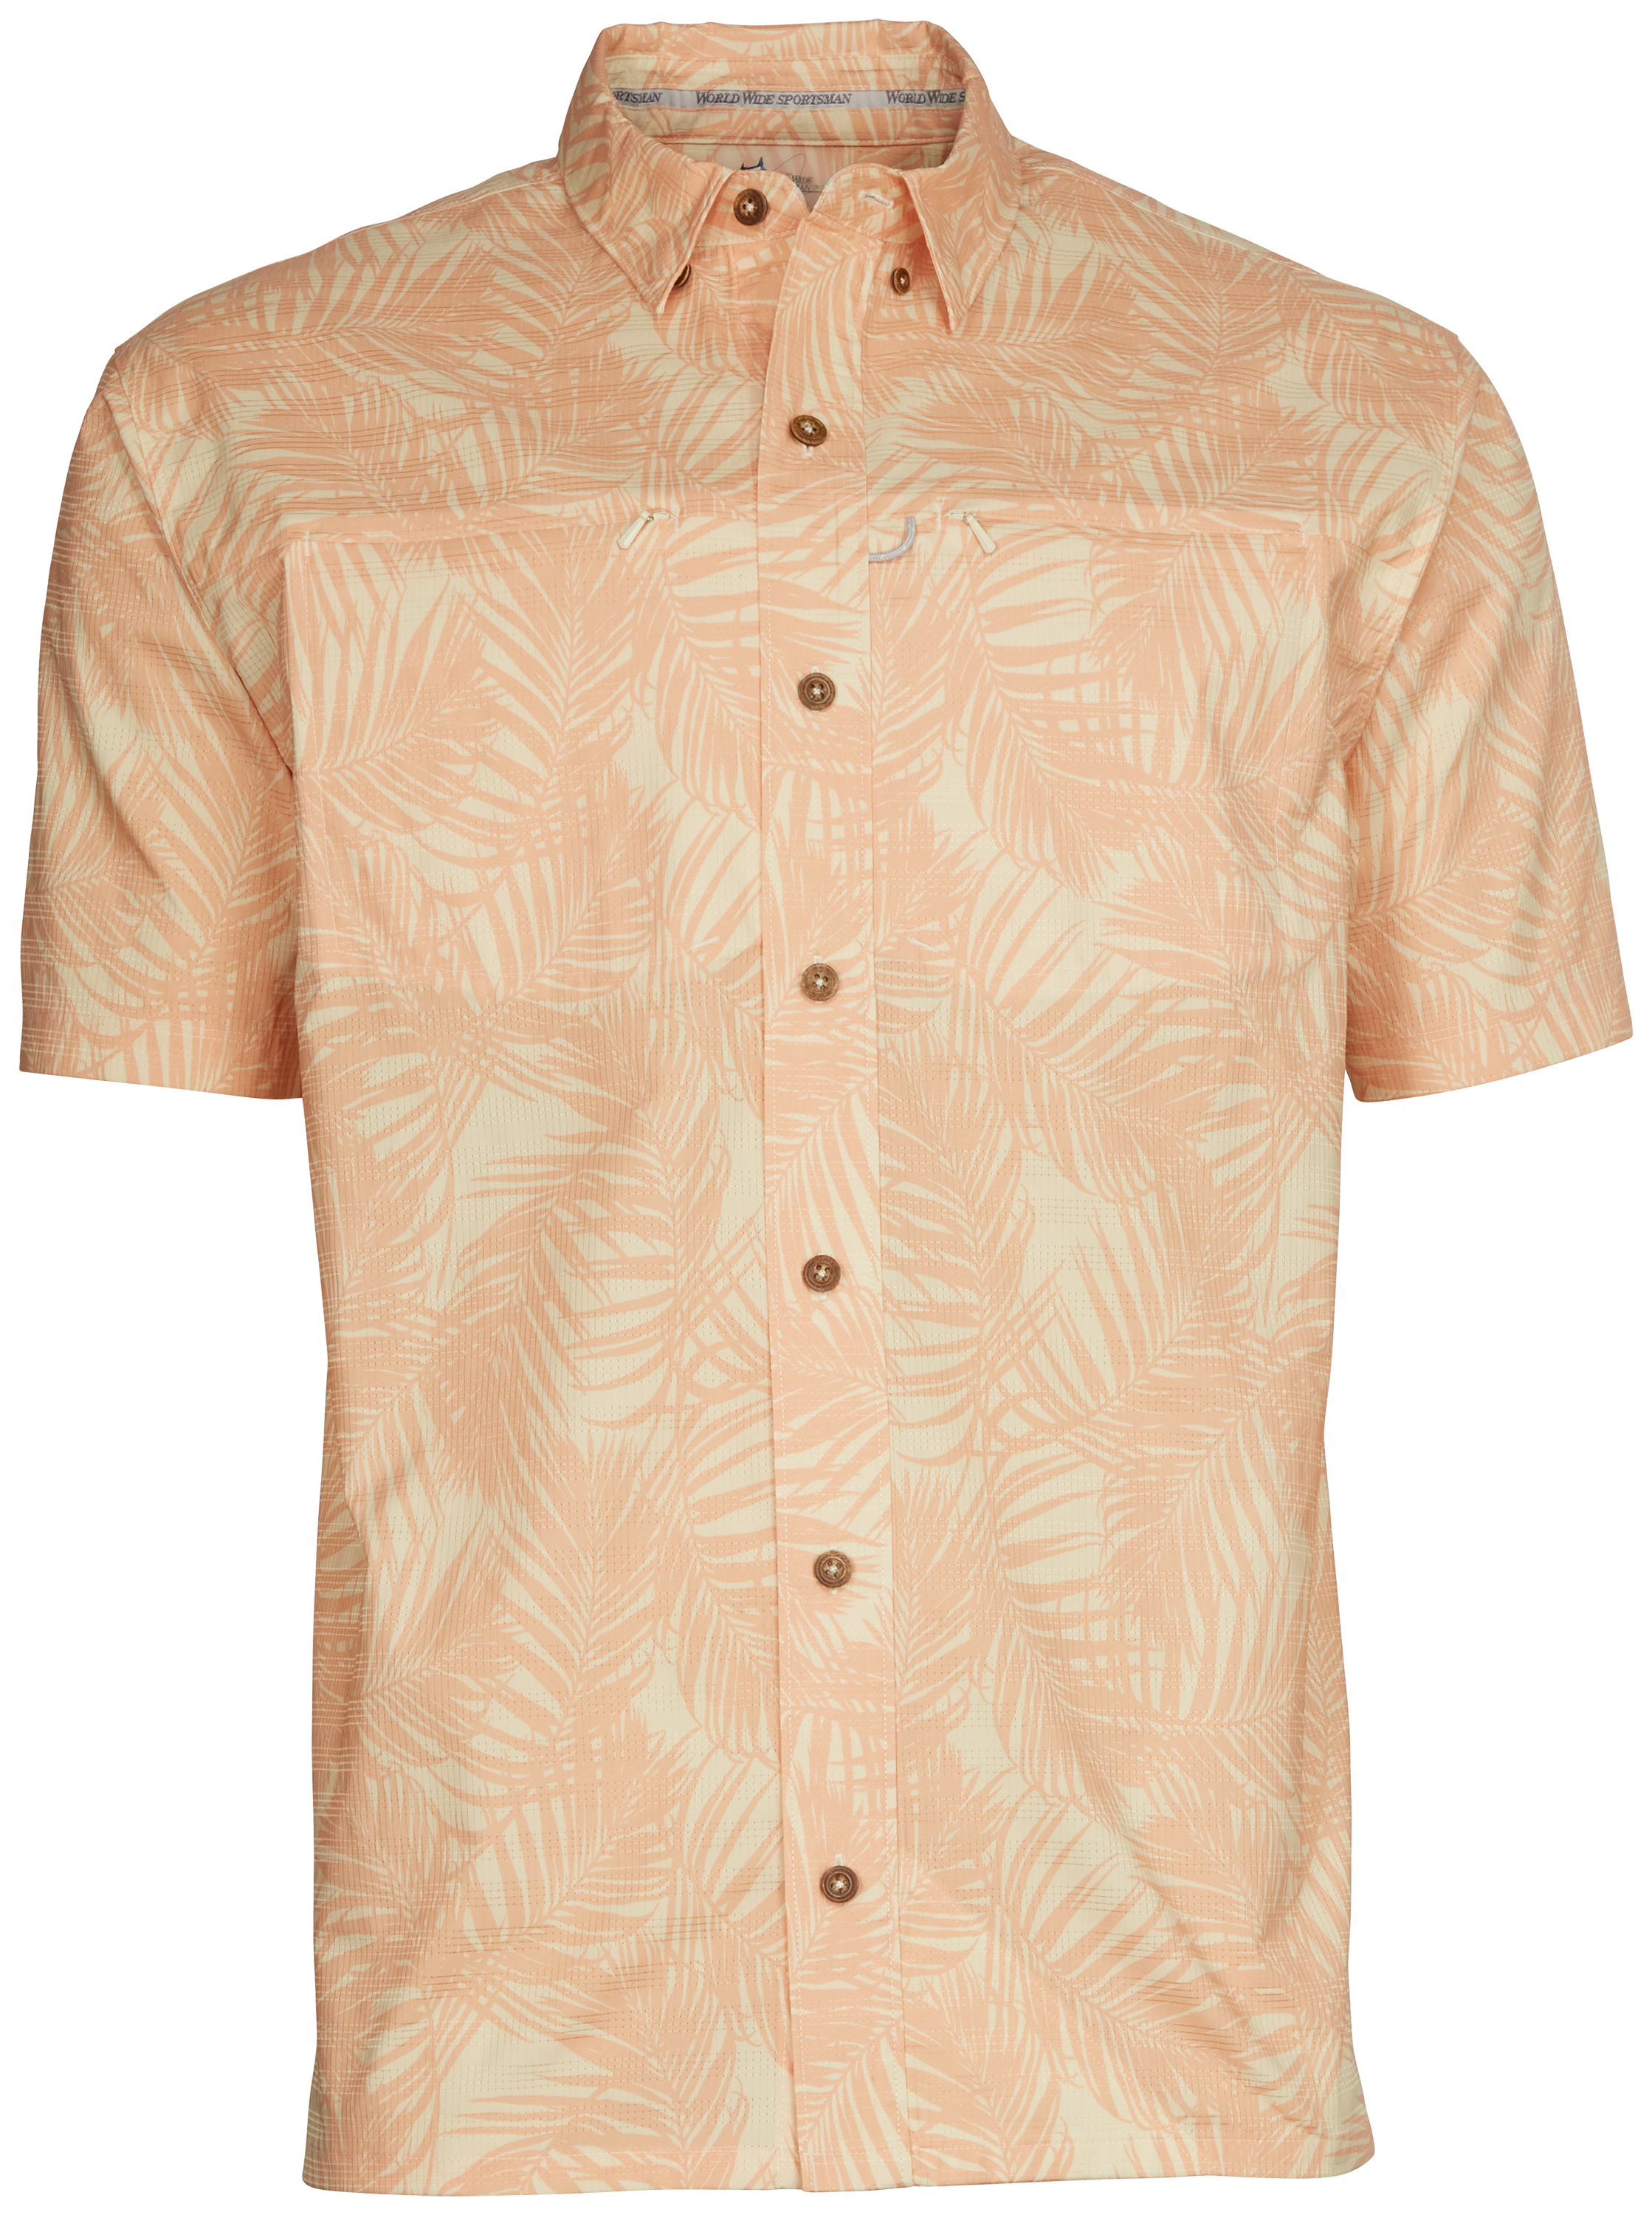 World Wide Sportsman Seacrest Print Short-Sleeve Button-Down Shirt for Men - Apricot Palms - 3XL